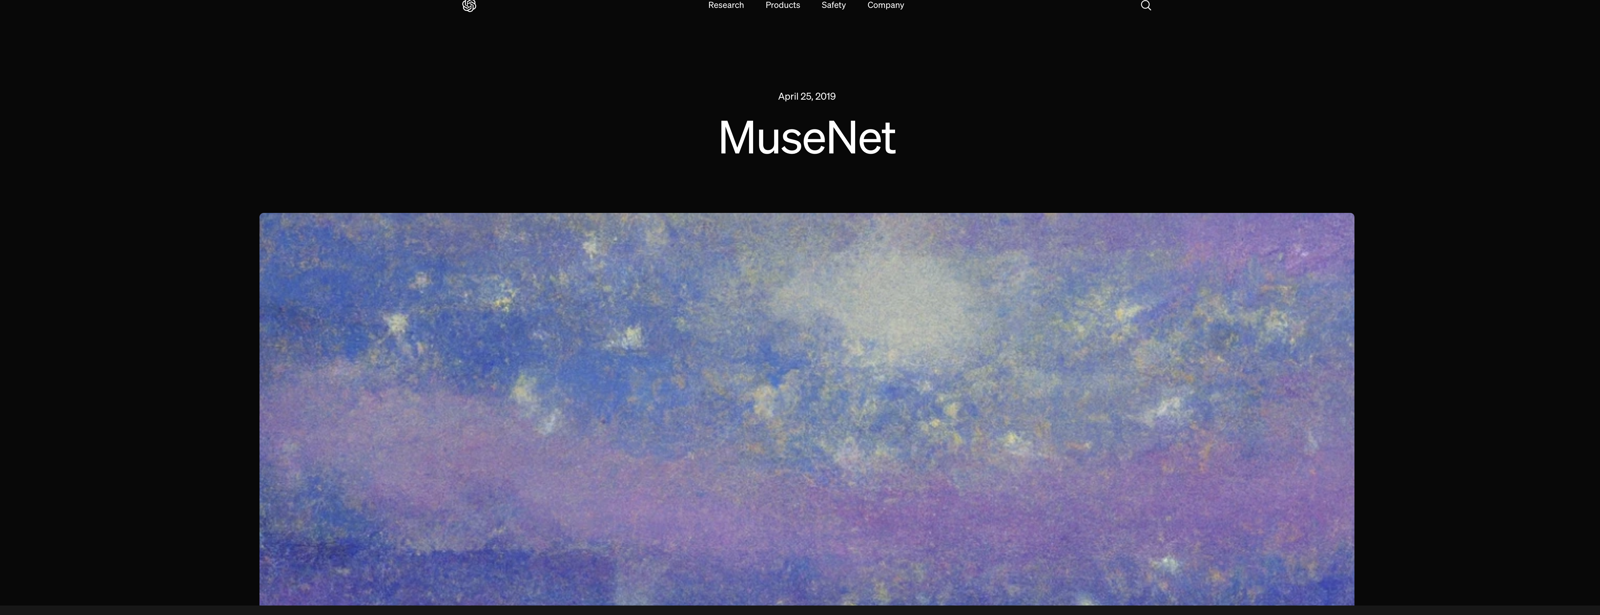 MuseNet website